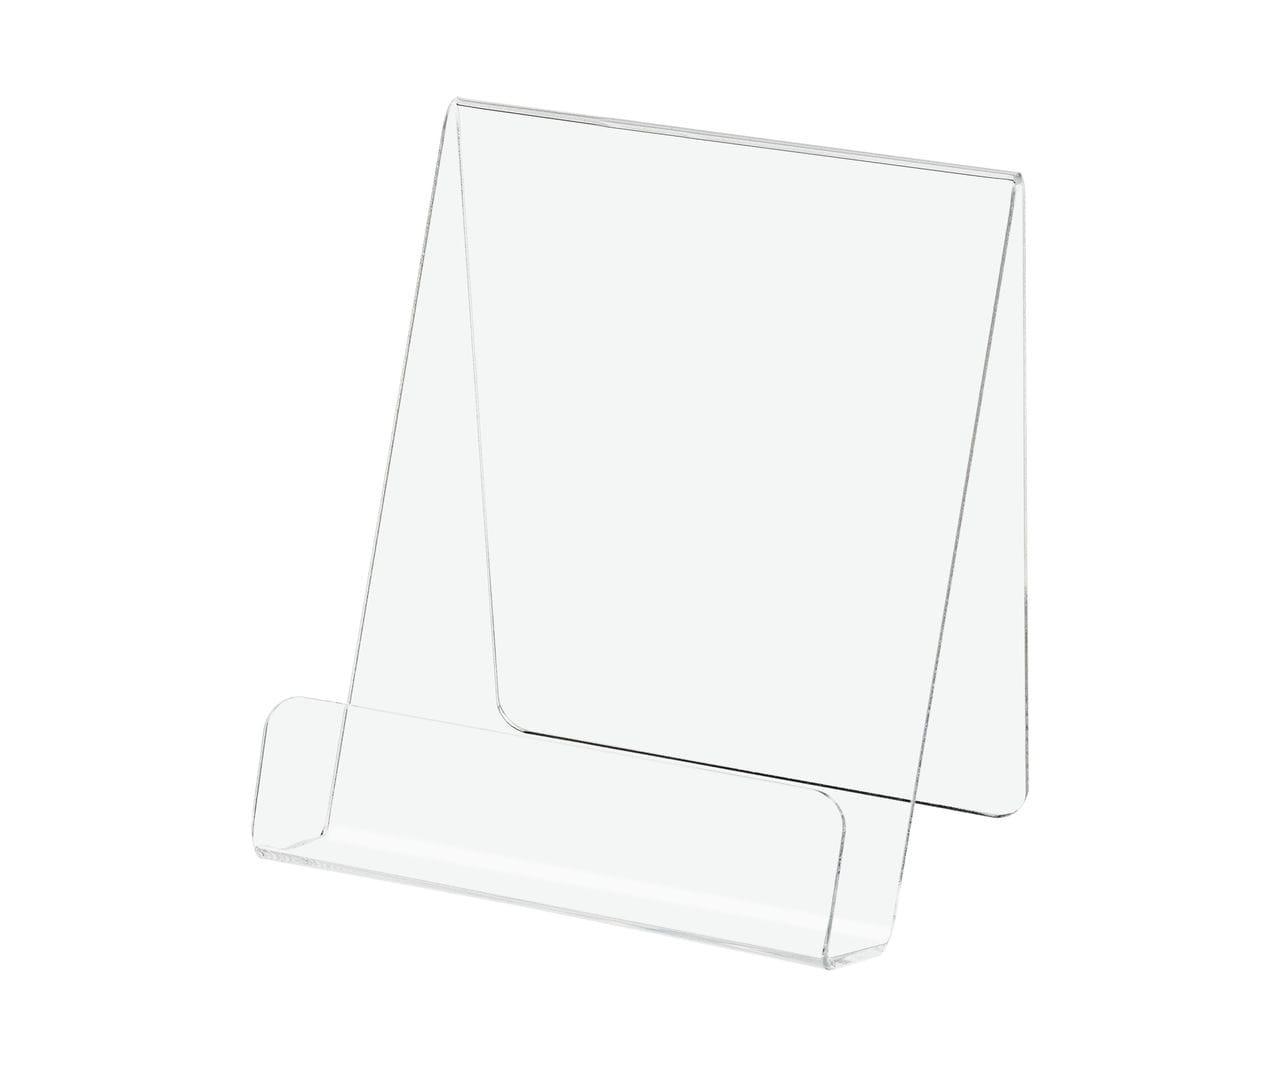 4”W x 5H Small Photo Postcard Display Desktop Easel J Stand